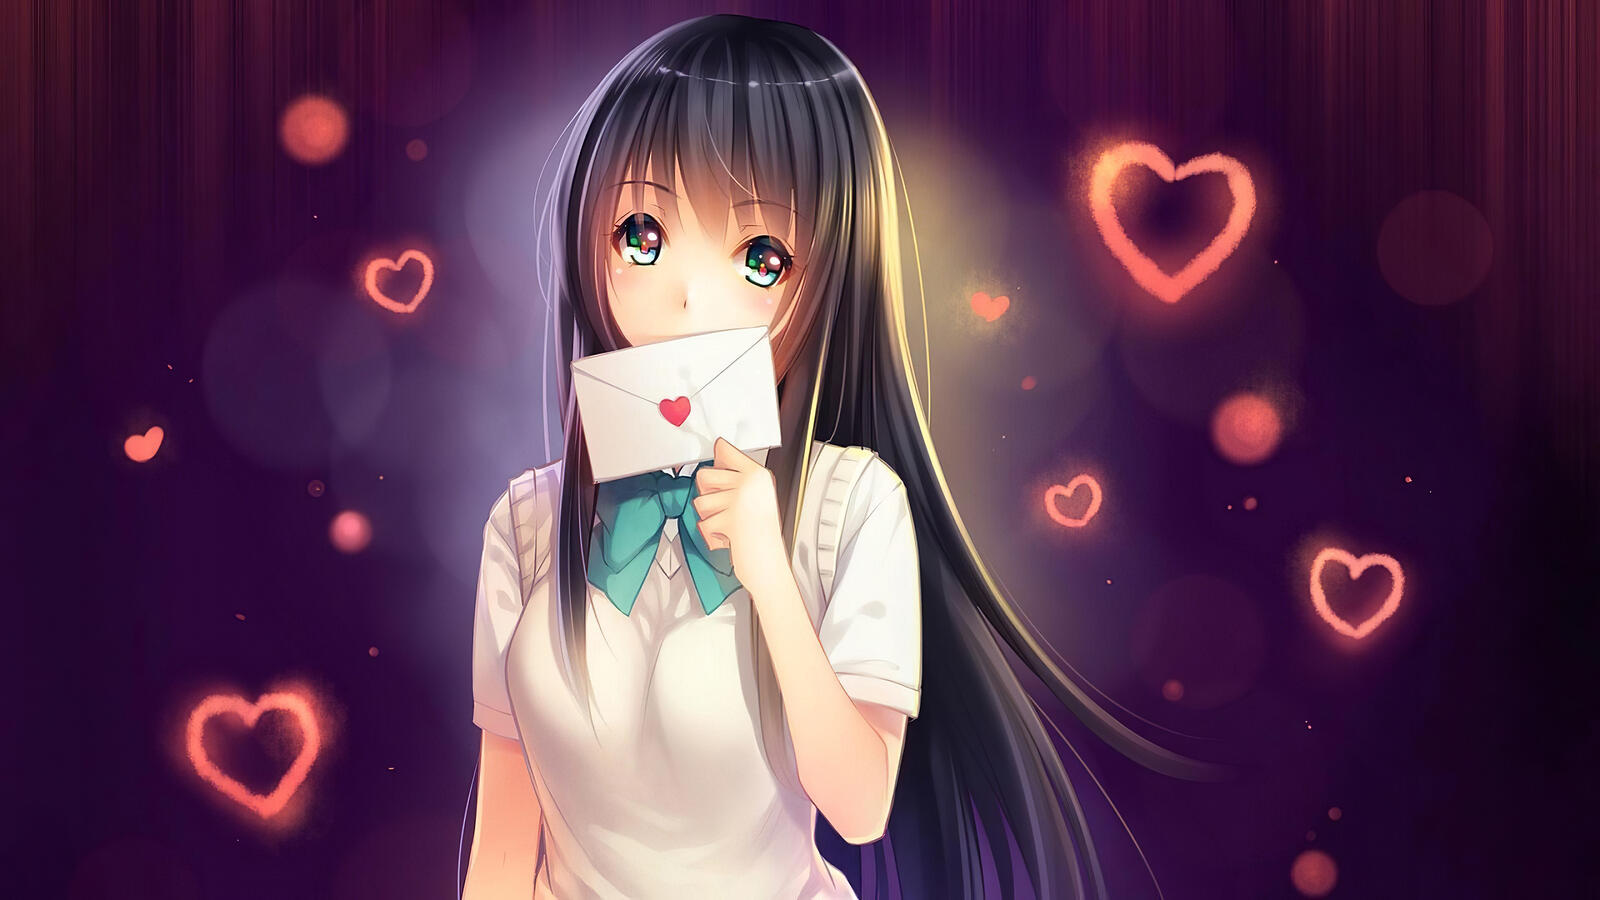 Wallpapers an anime anime girl hearts on the desktop